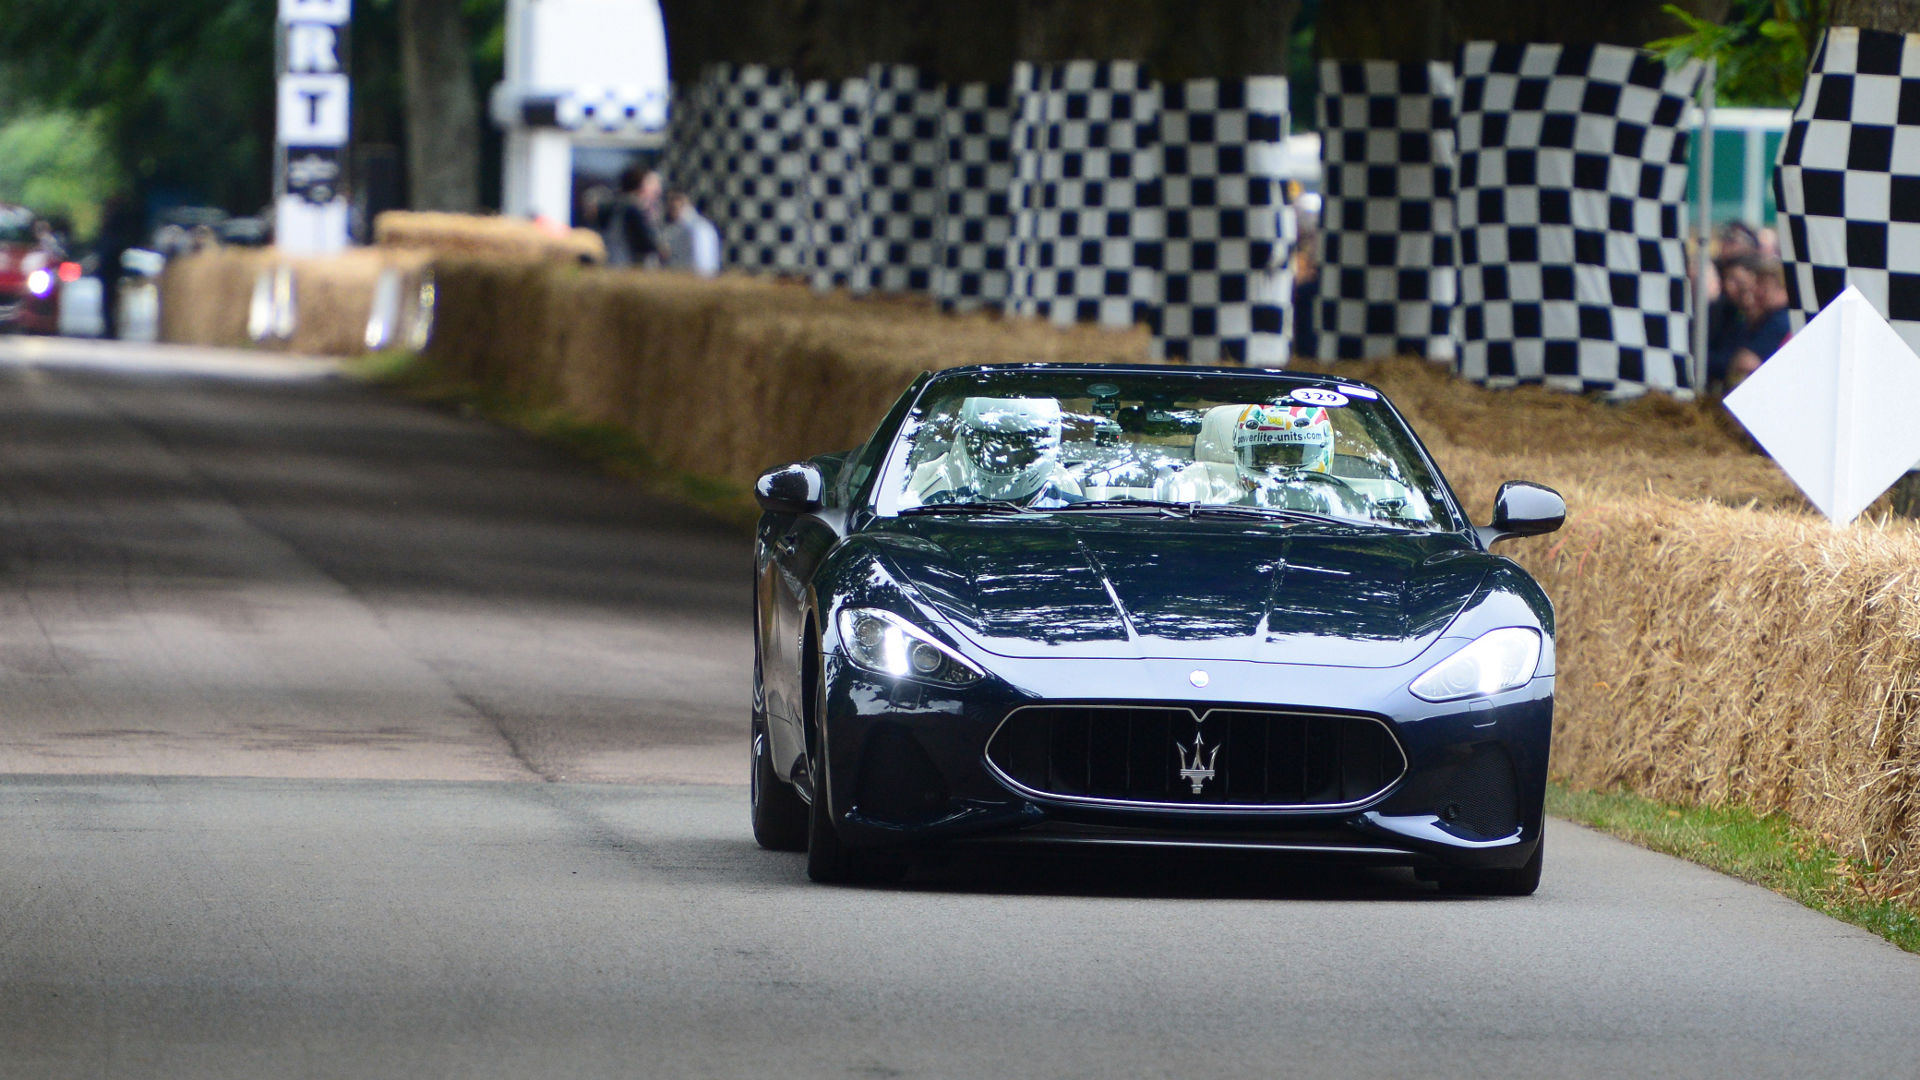 Maserati GranCabrio on track during Goodwood Festival